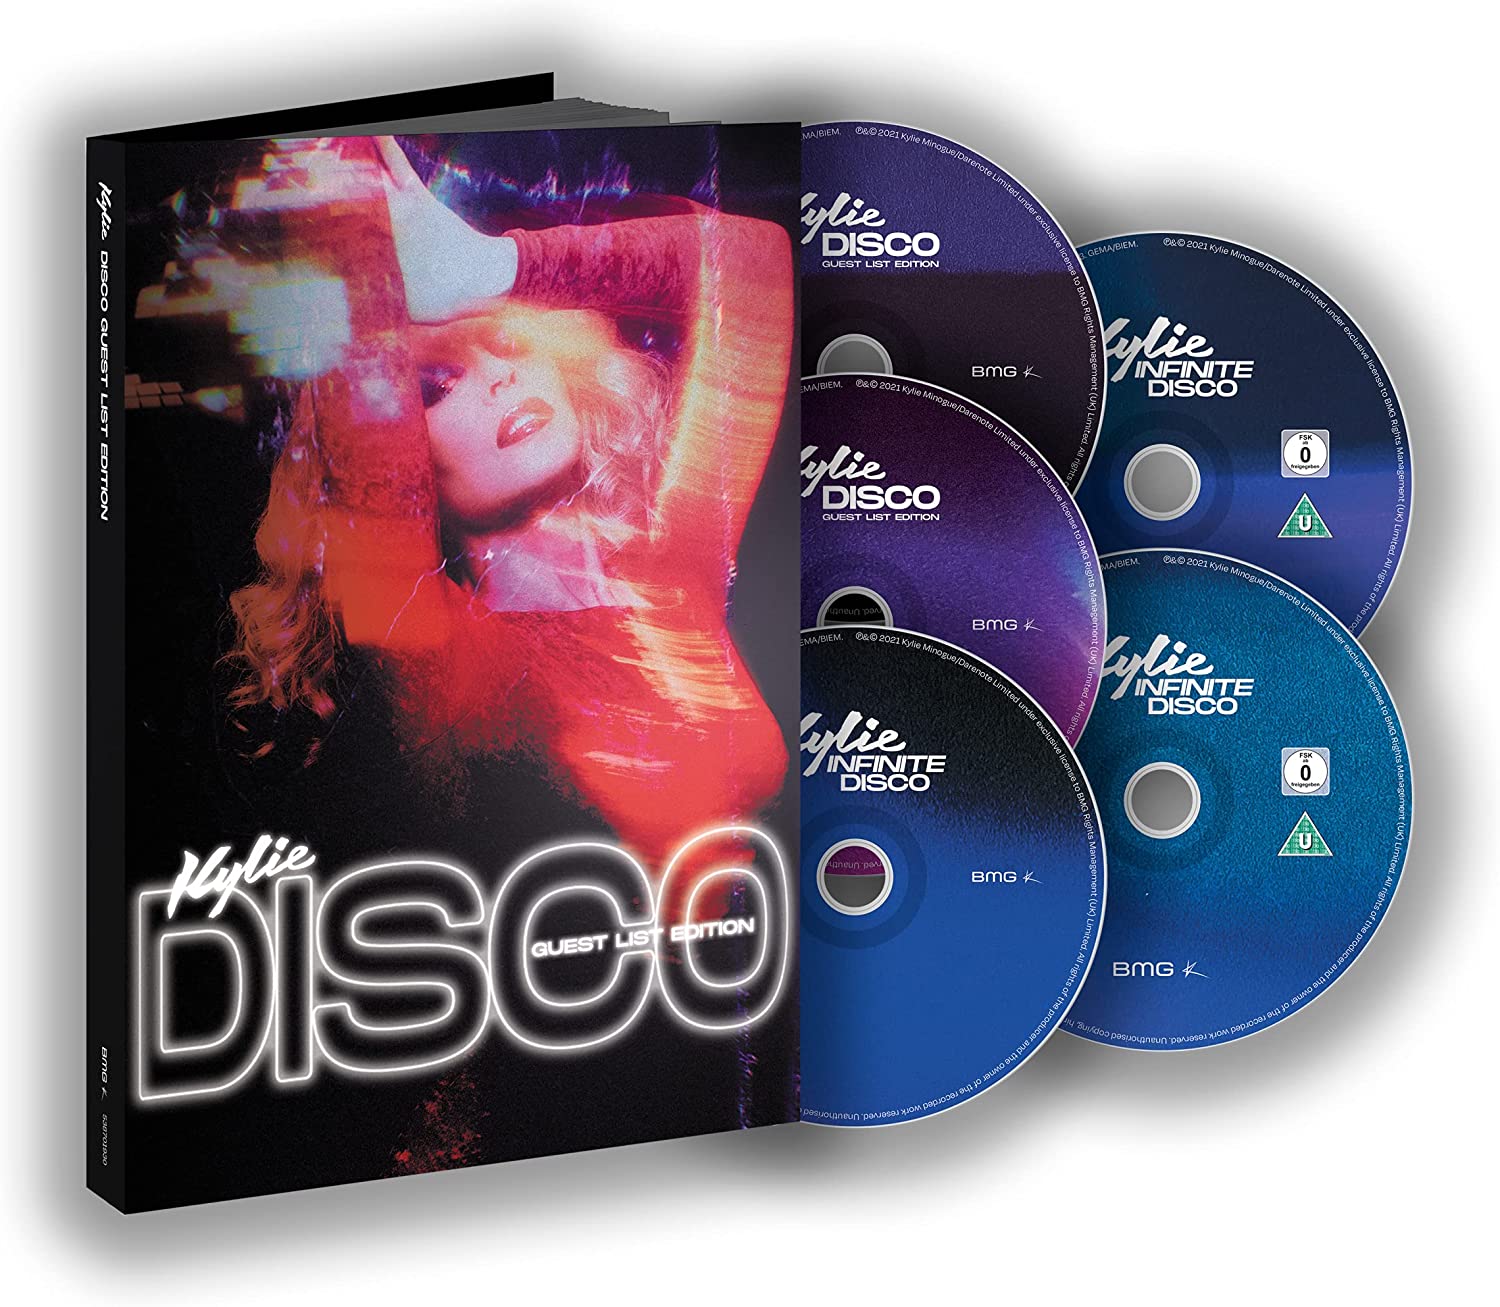 Kylie / Disco Guest list edition